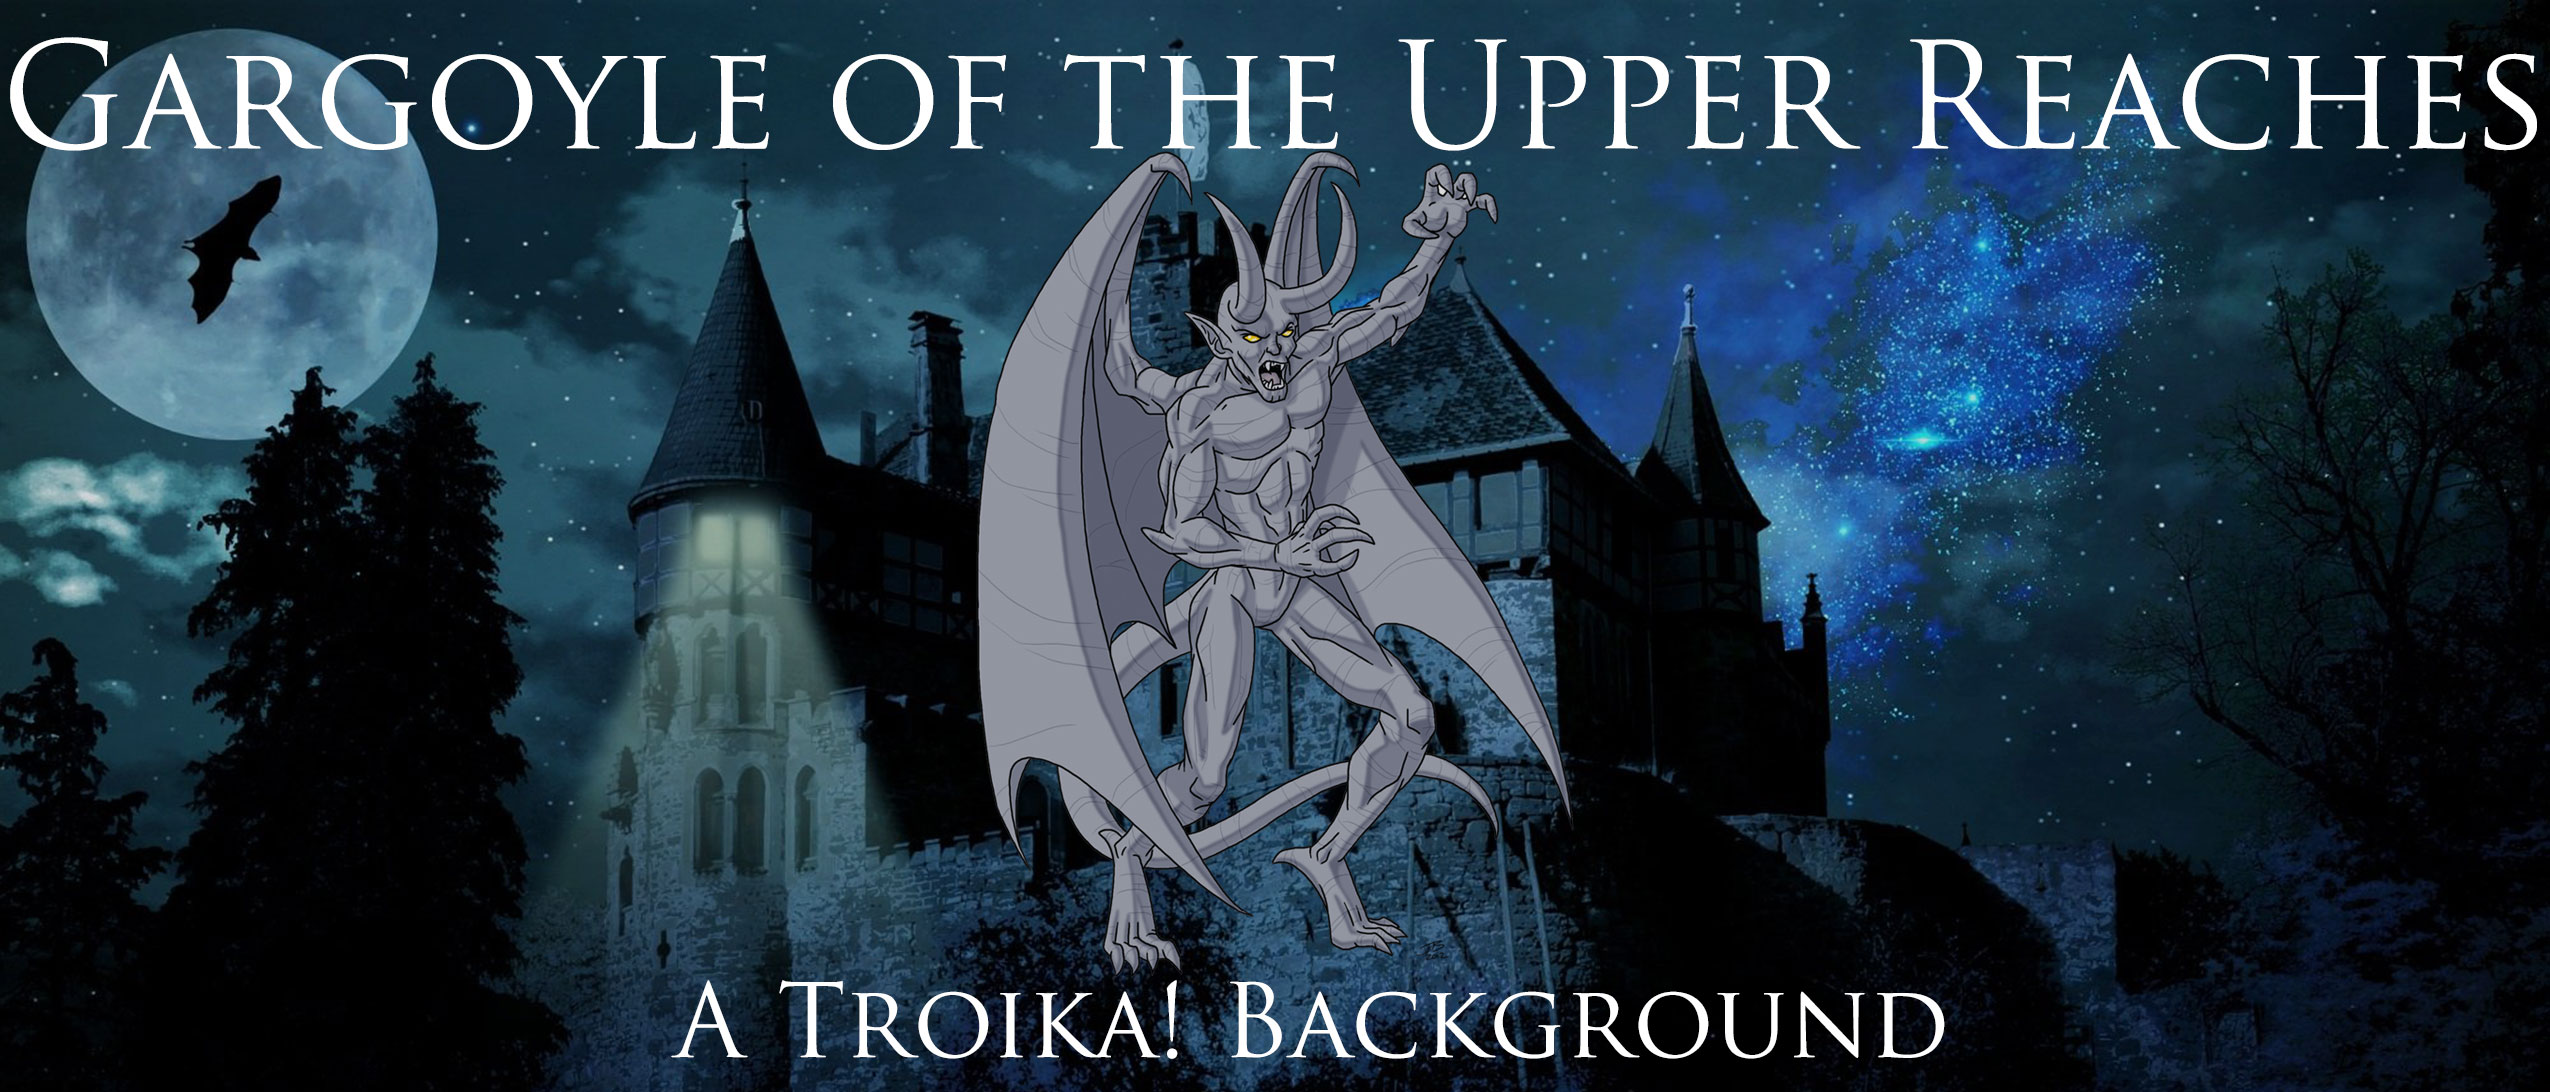 Gargoyle of the Upper Reaches - A Troika! Background